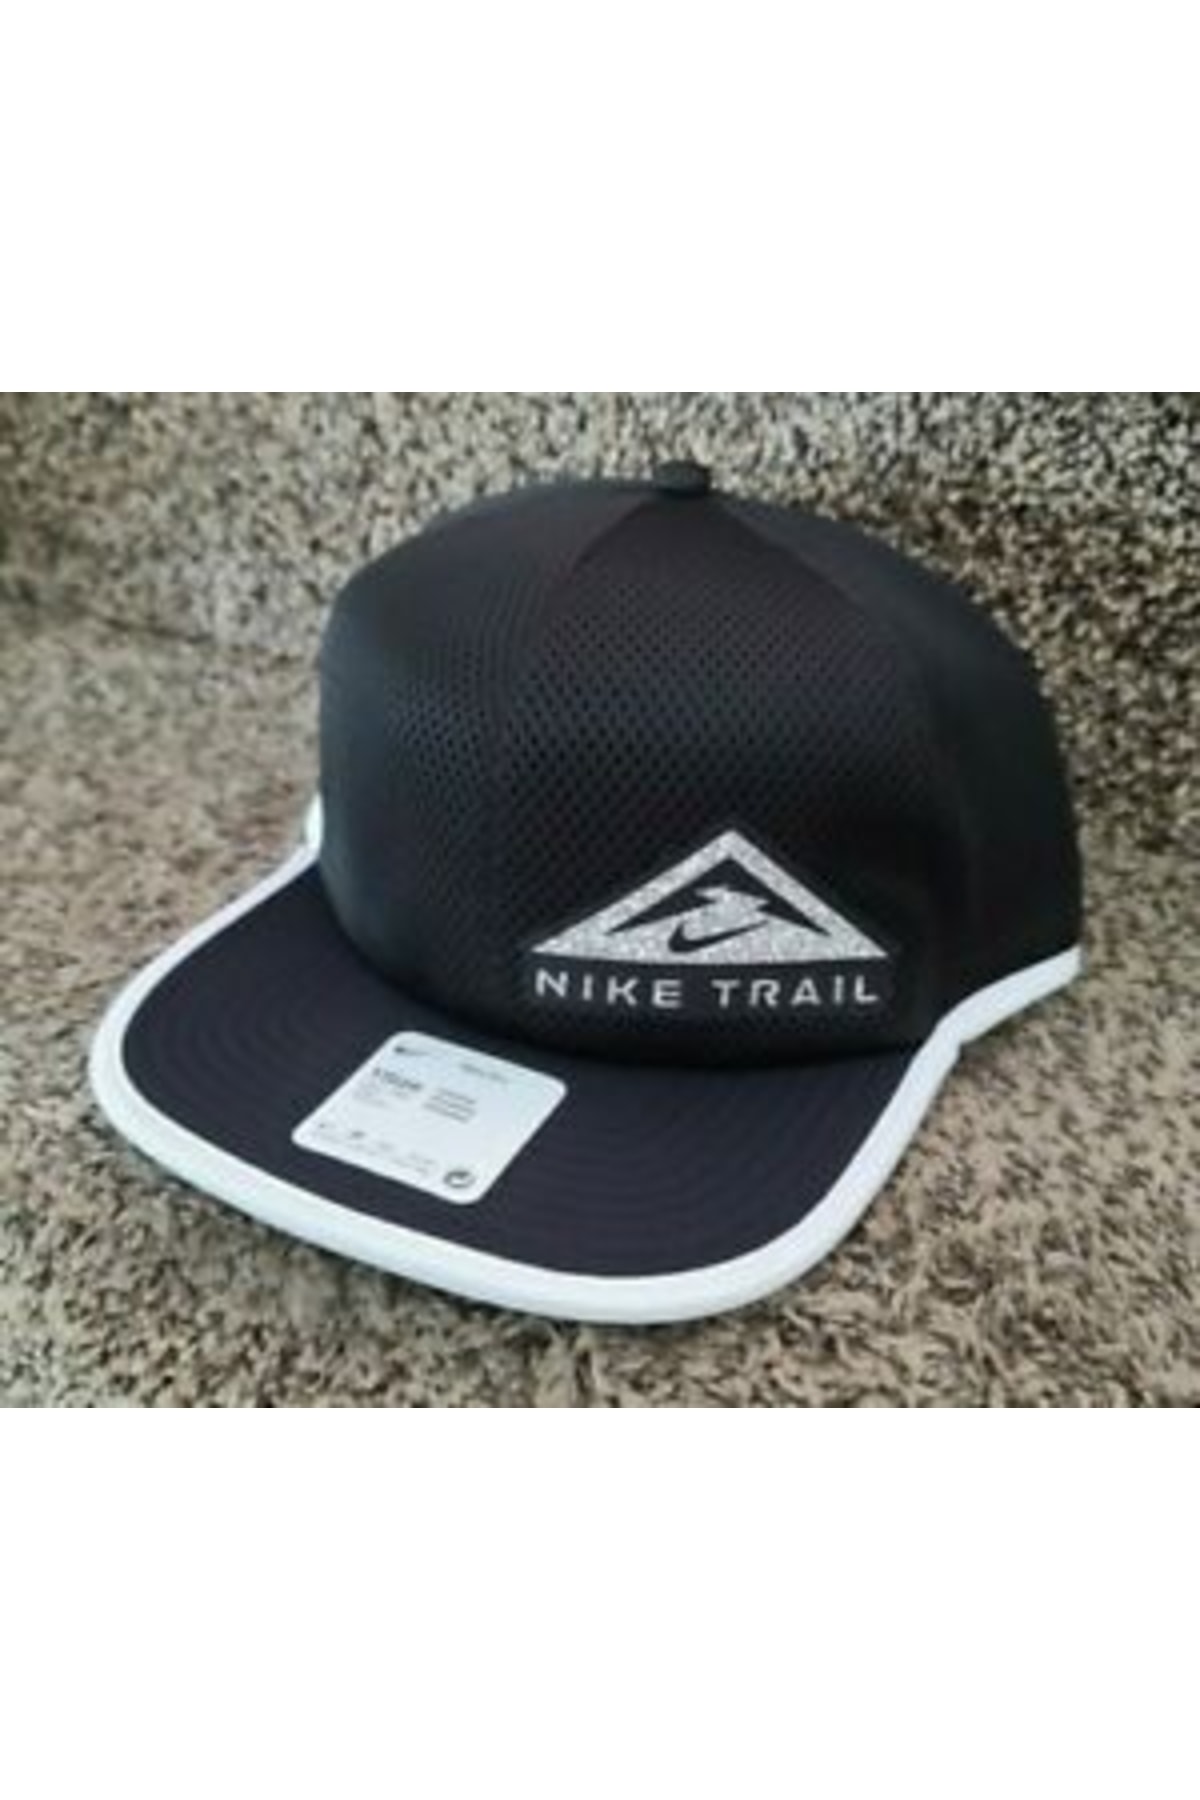 Nike Dri-fit Trail Black Pro Hat Cap Strapback Dc3625-011